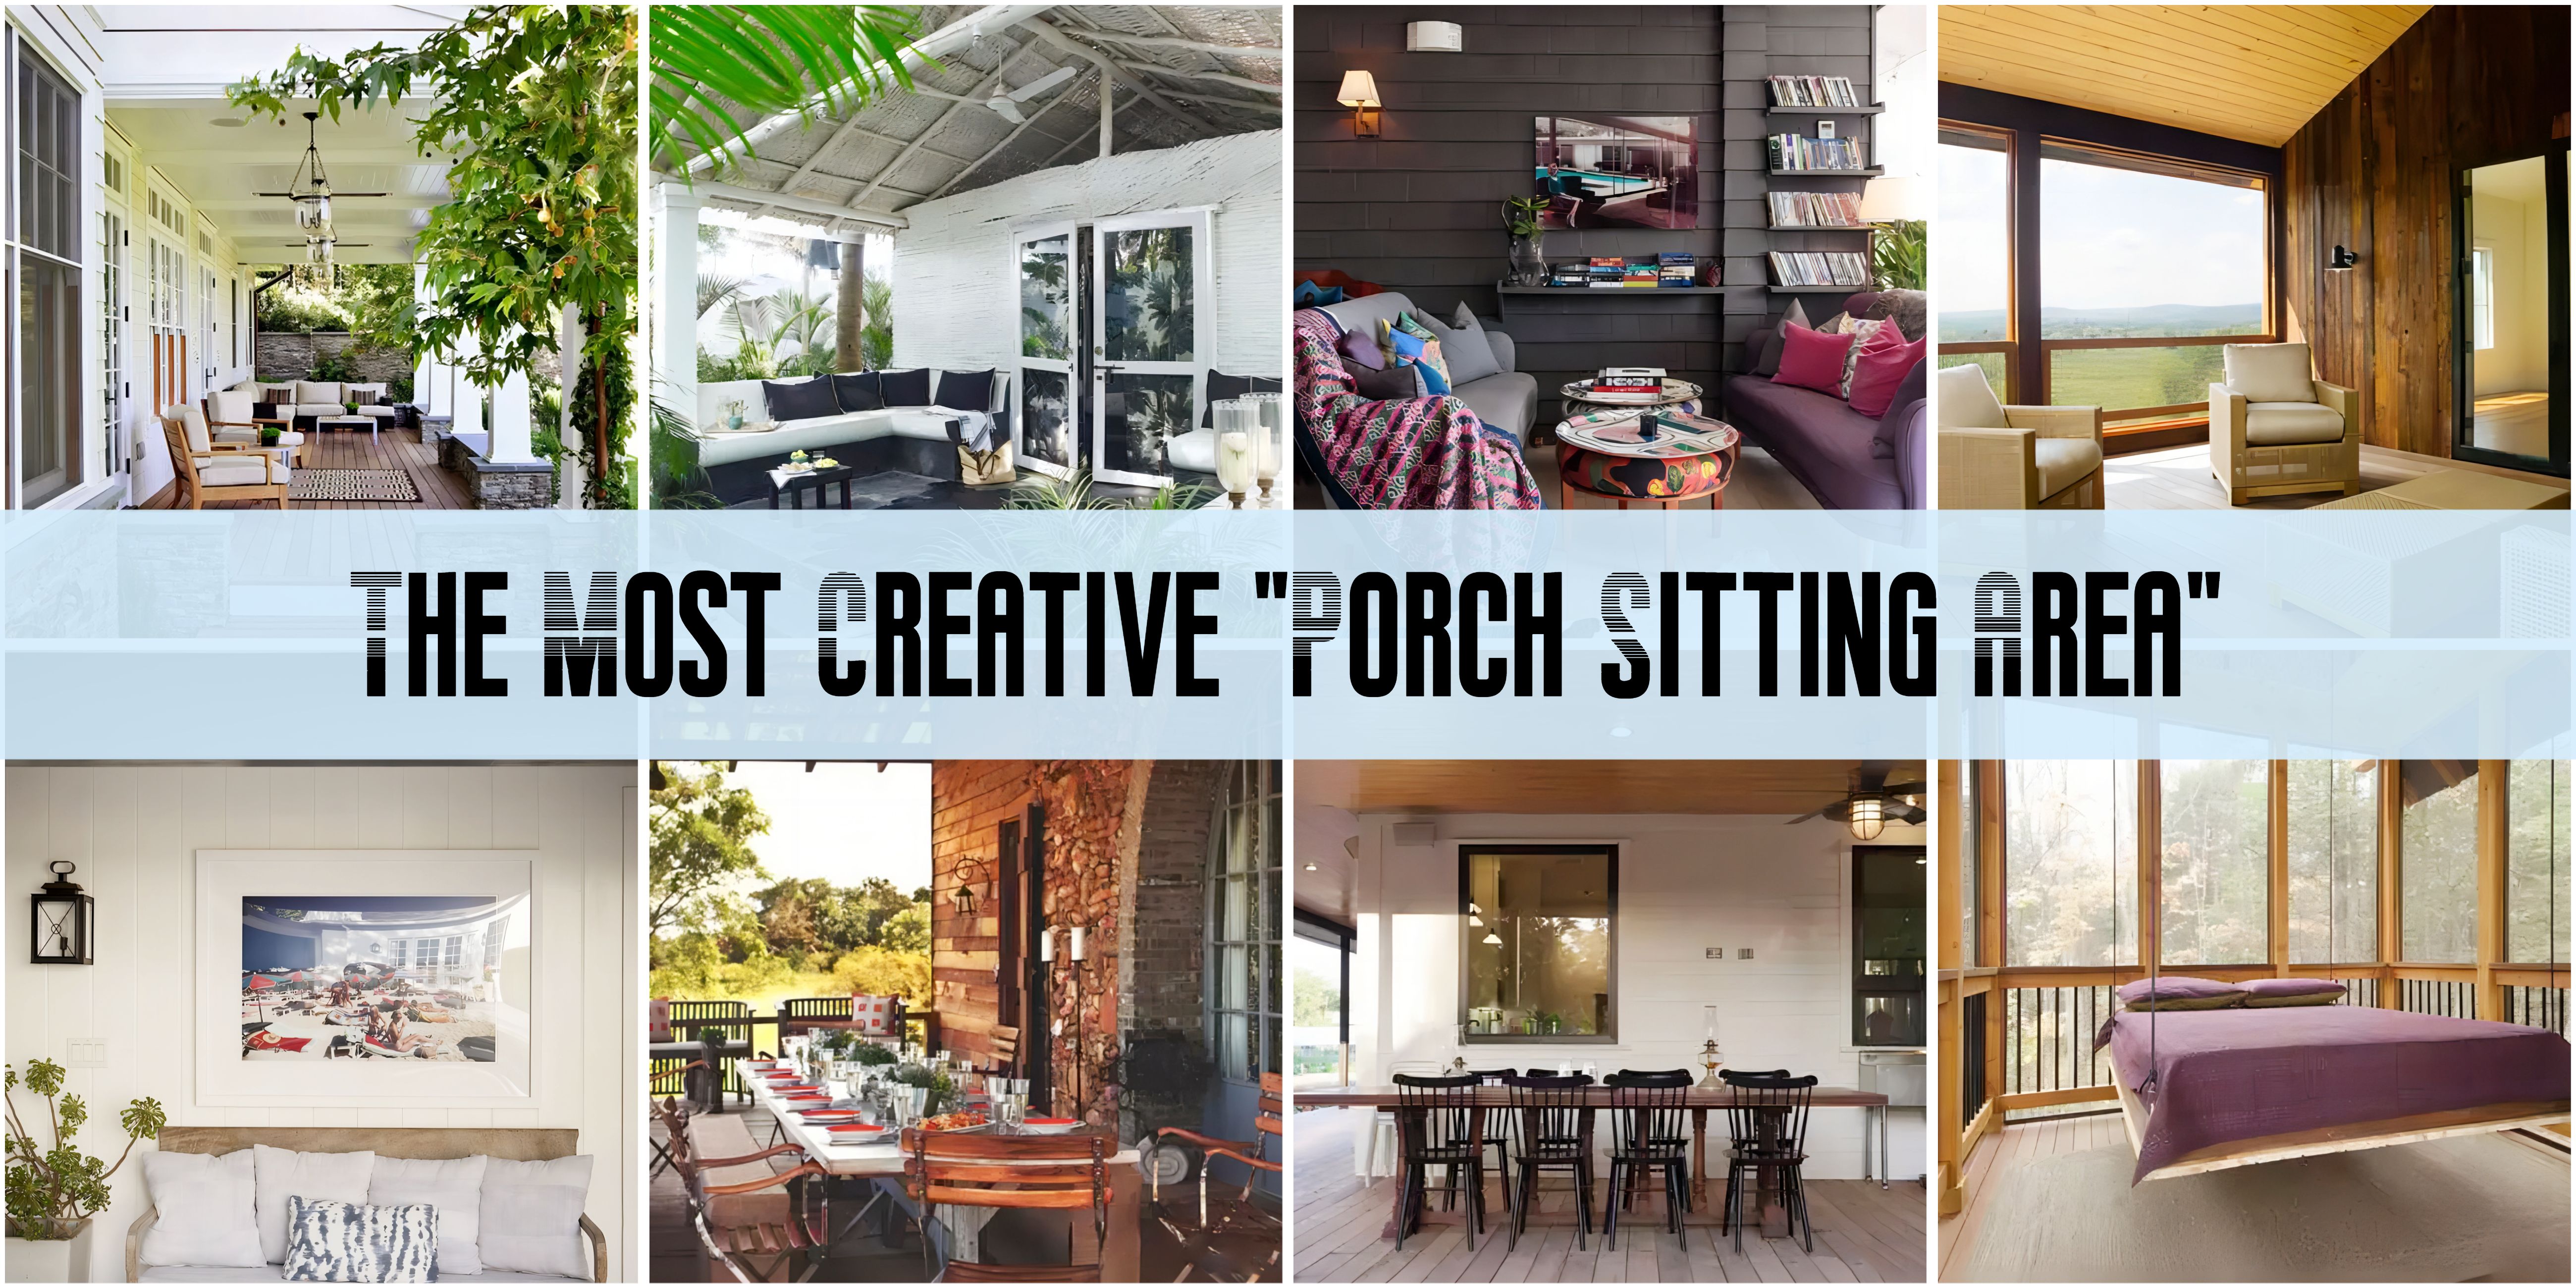 The most creative porch seating area, super cozy!